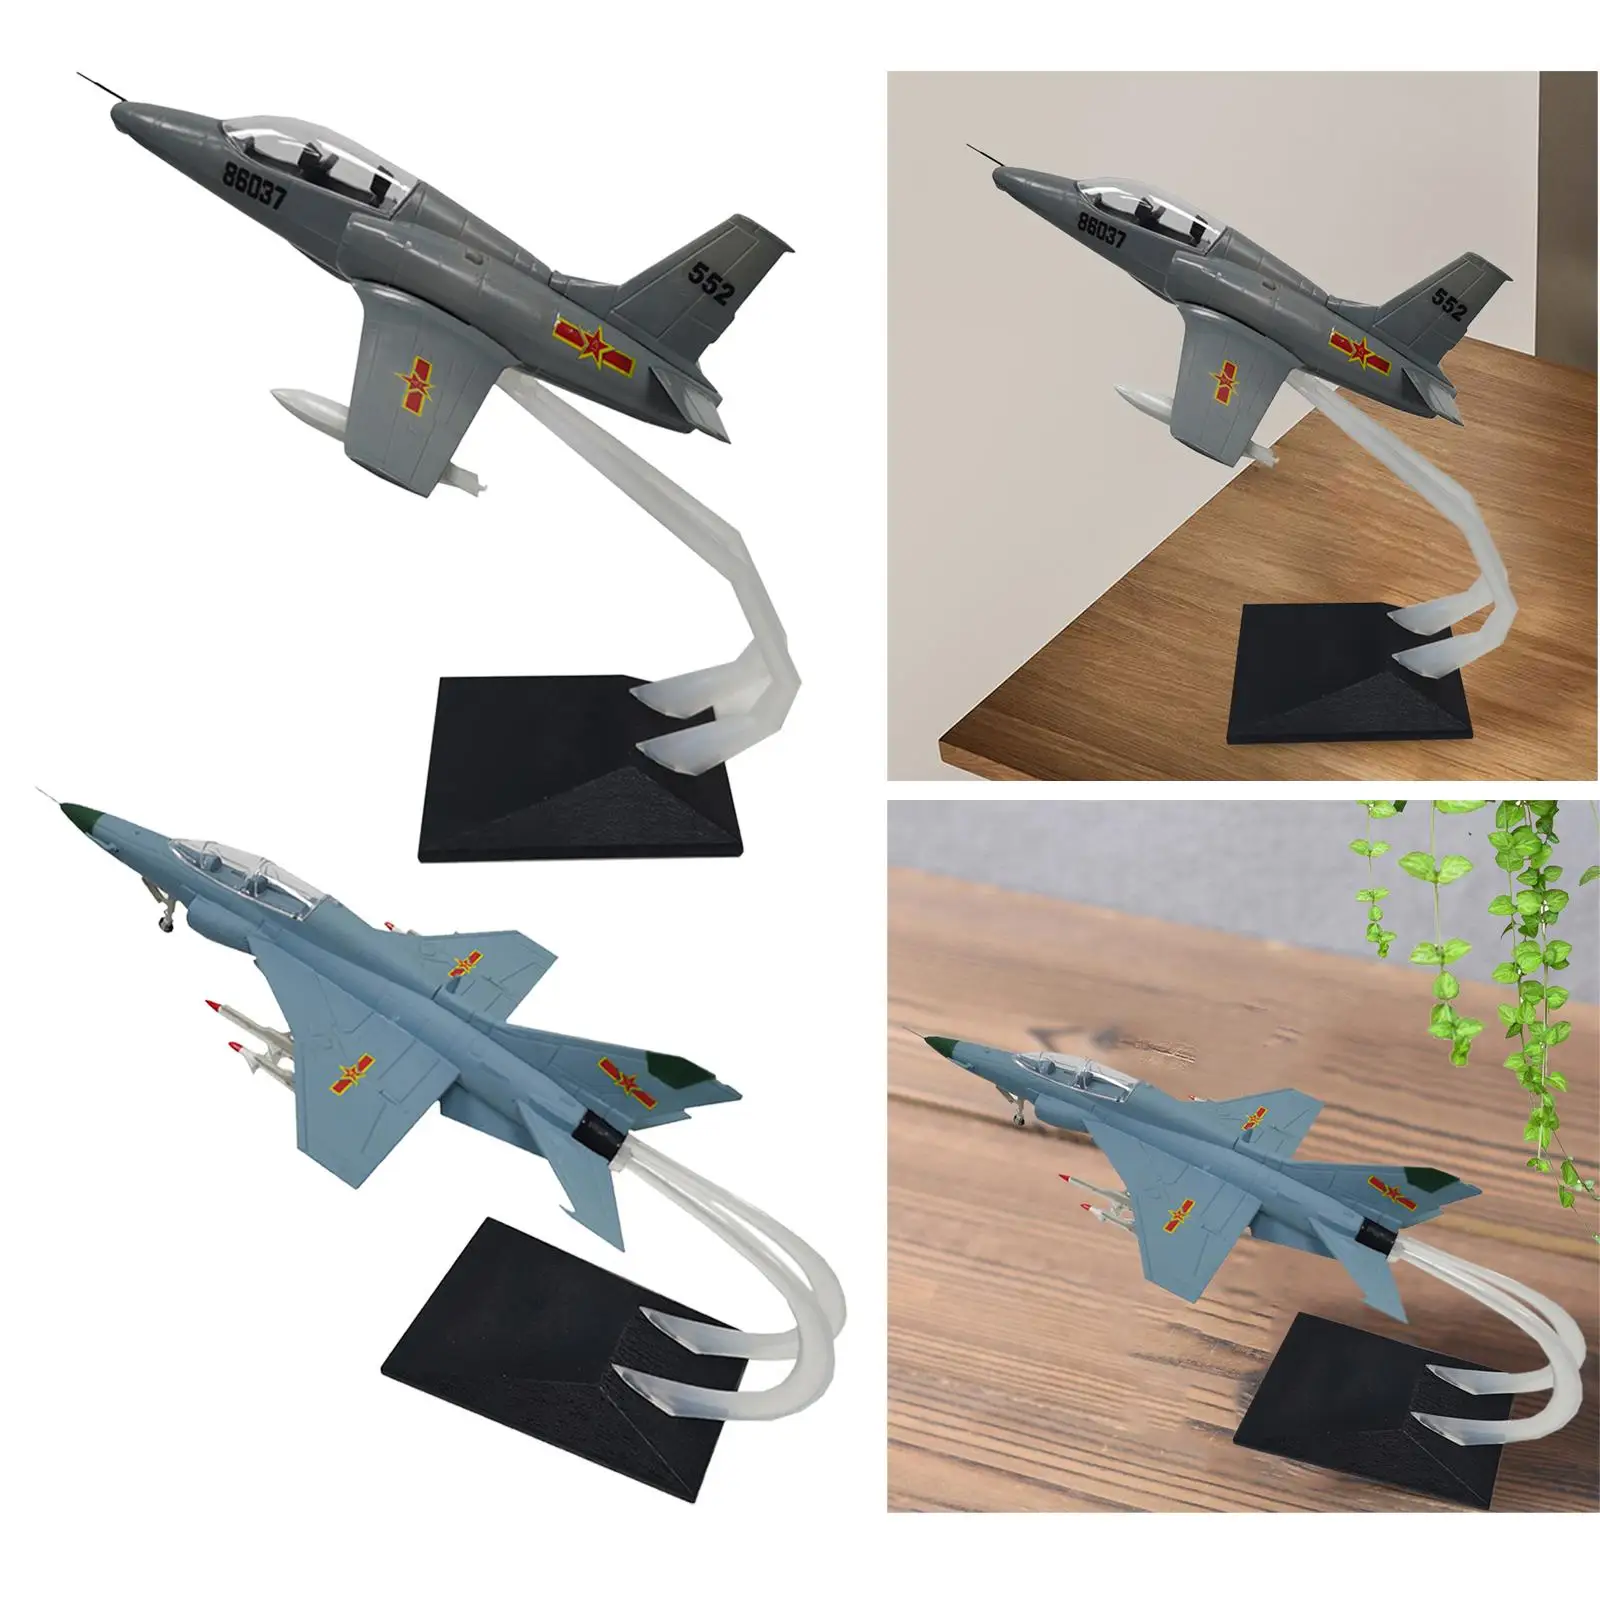 Fighter Model 1:48 Scale Diecast Model Planes for Bedroom Living Room